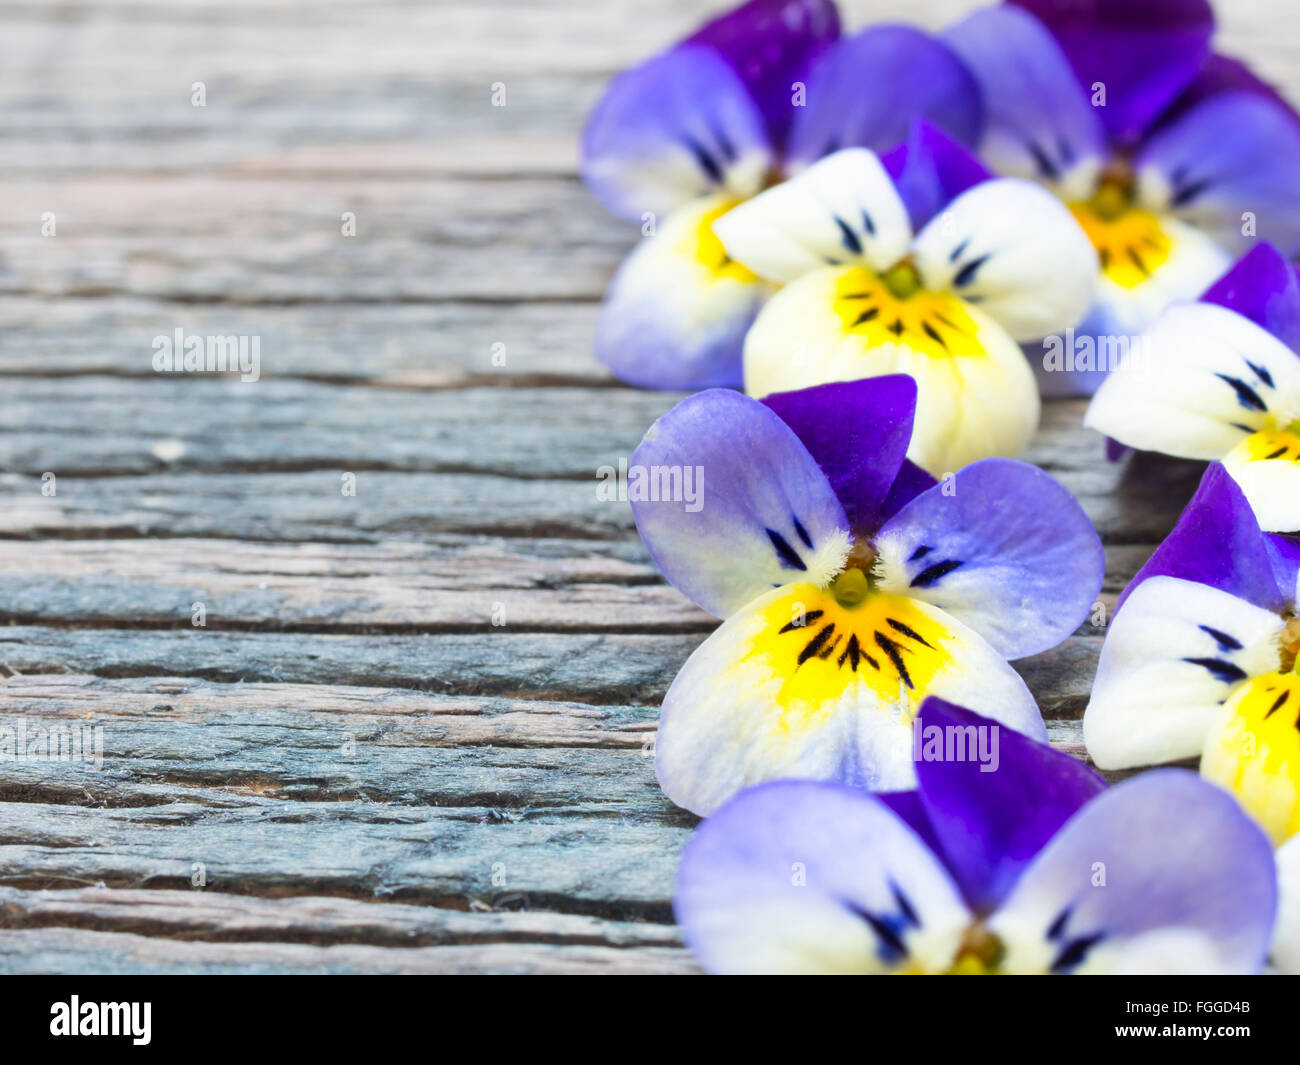 wild violets background Stock Photo